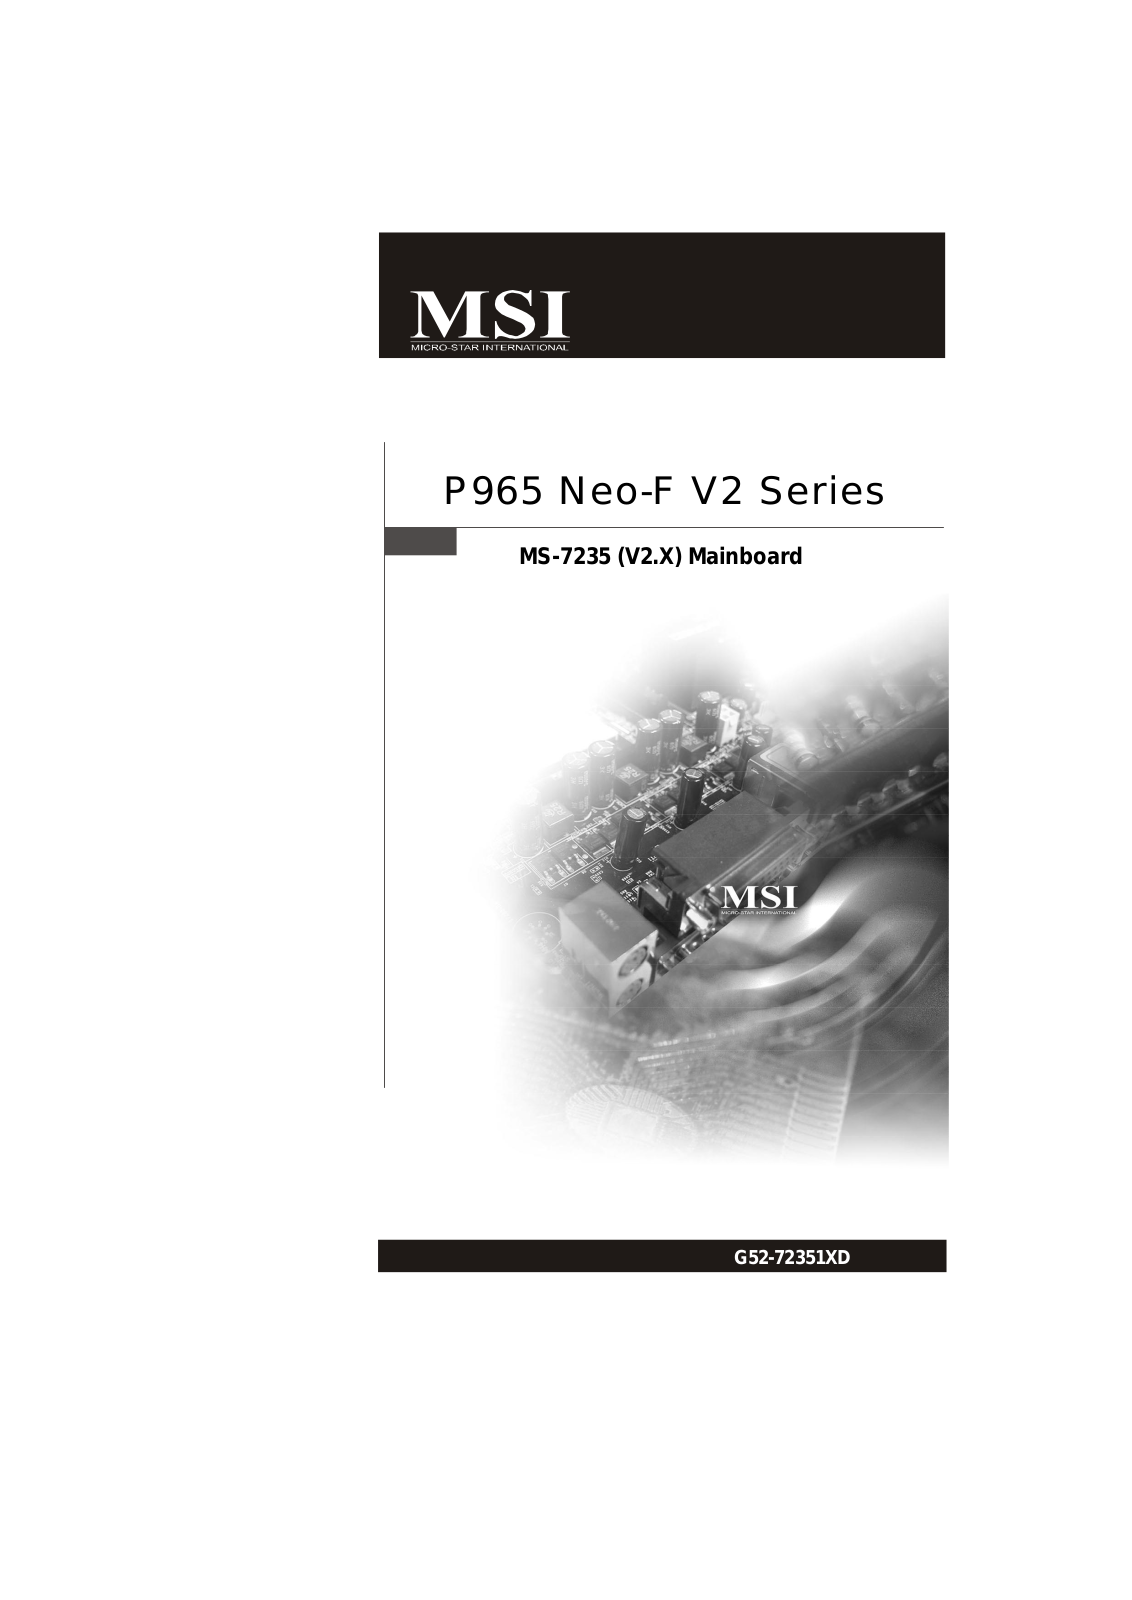 MSI P965 Neo-F User Manual